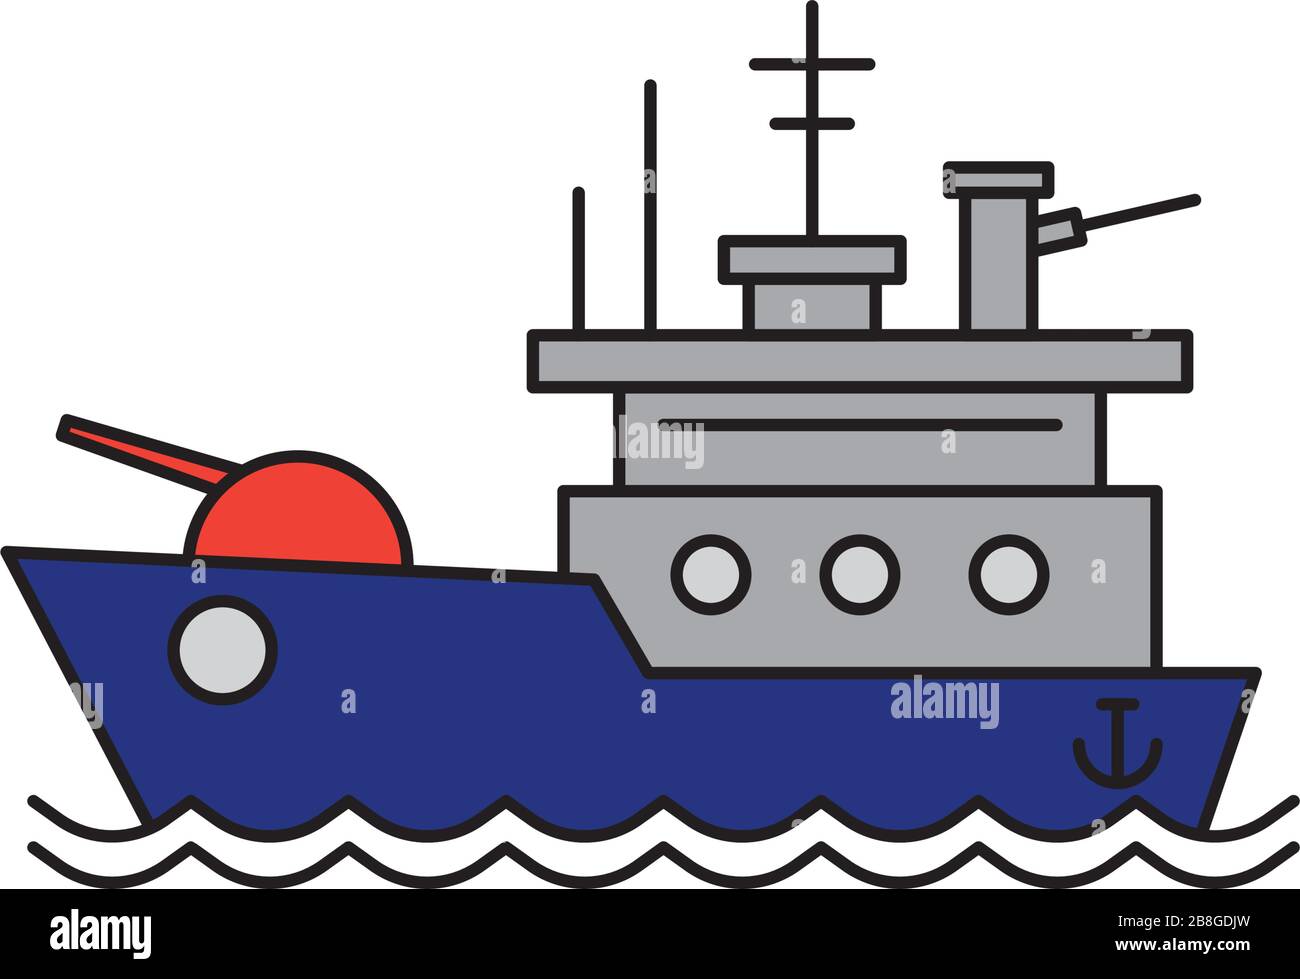 Battleship vector icon navy symbol isolated on white background Stock Vector